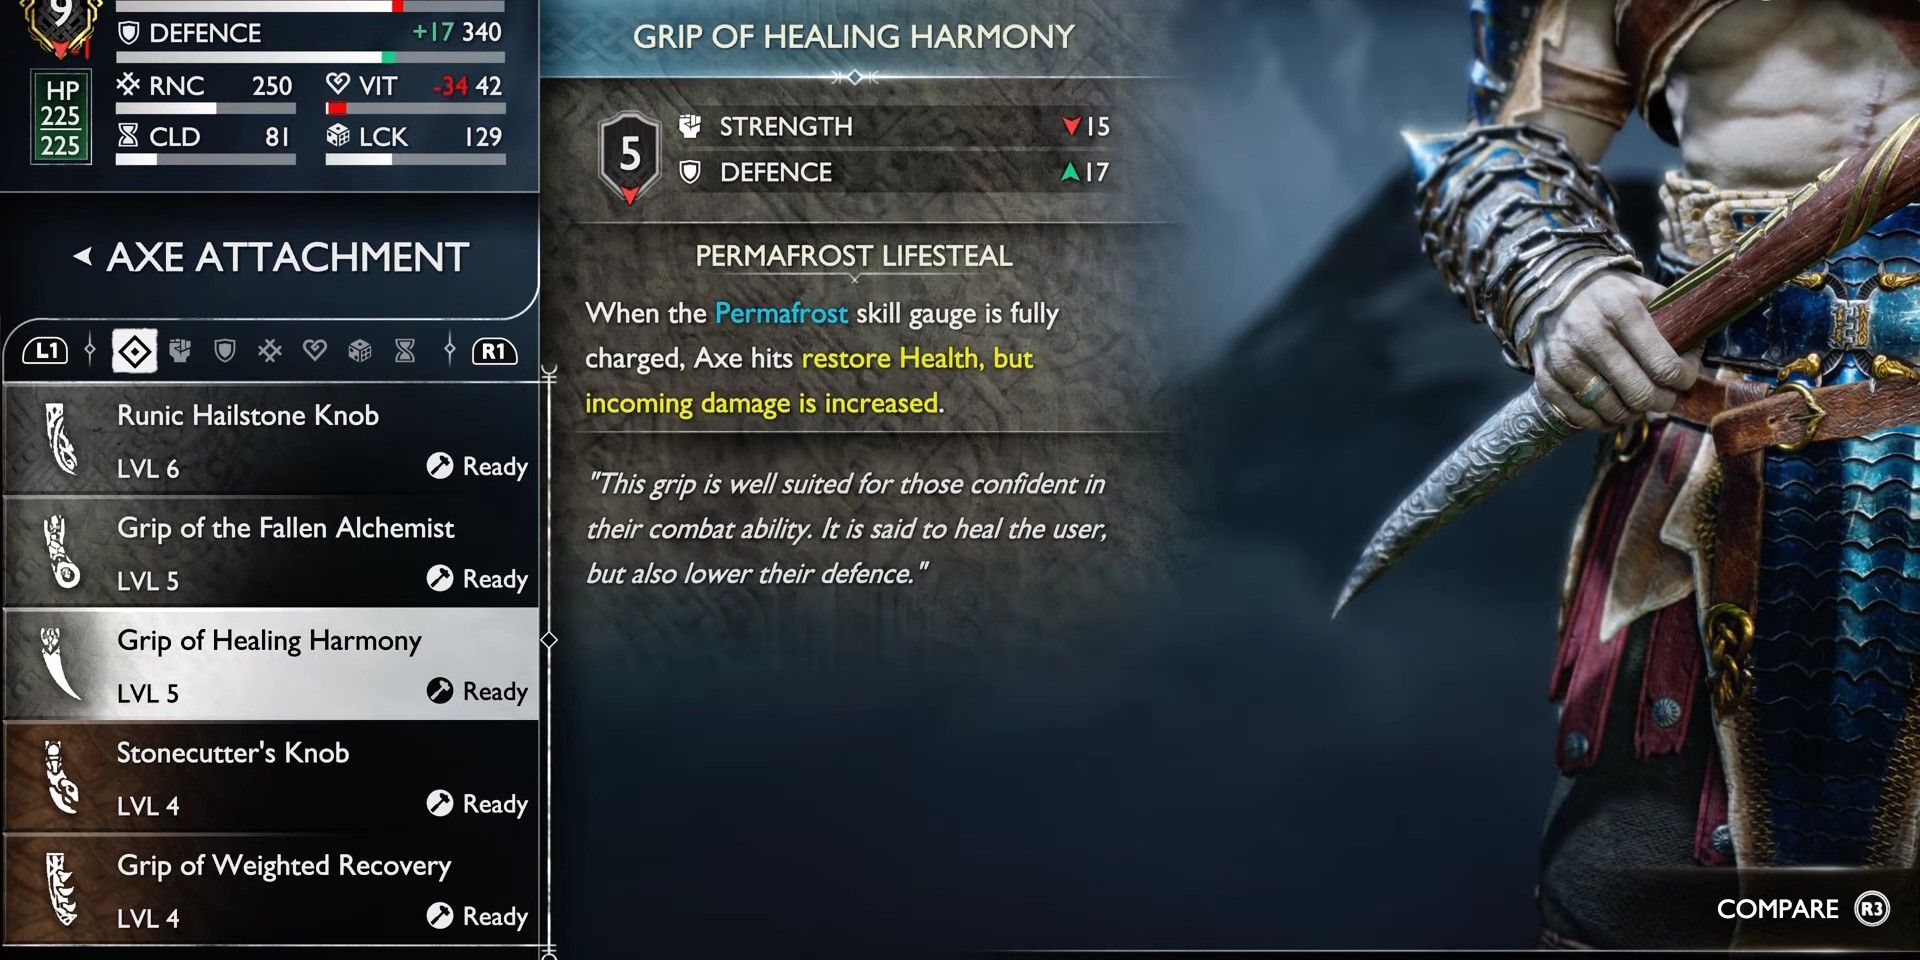 God of War Ragnarok Grip of Healing Harmony attachment description